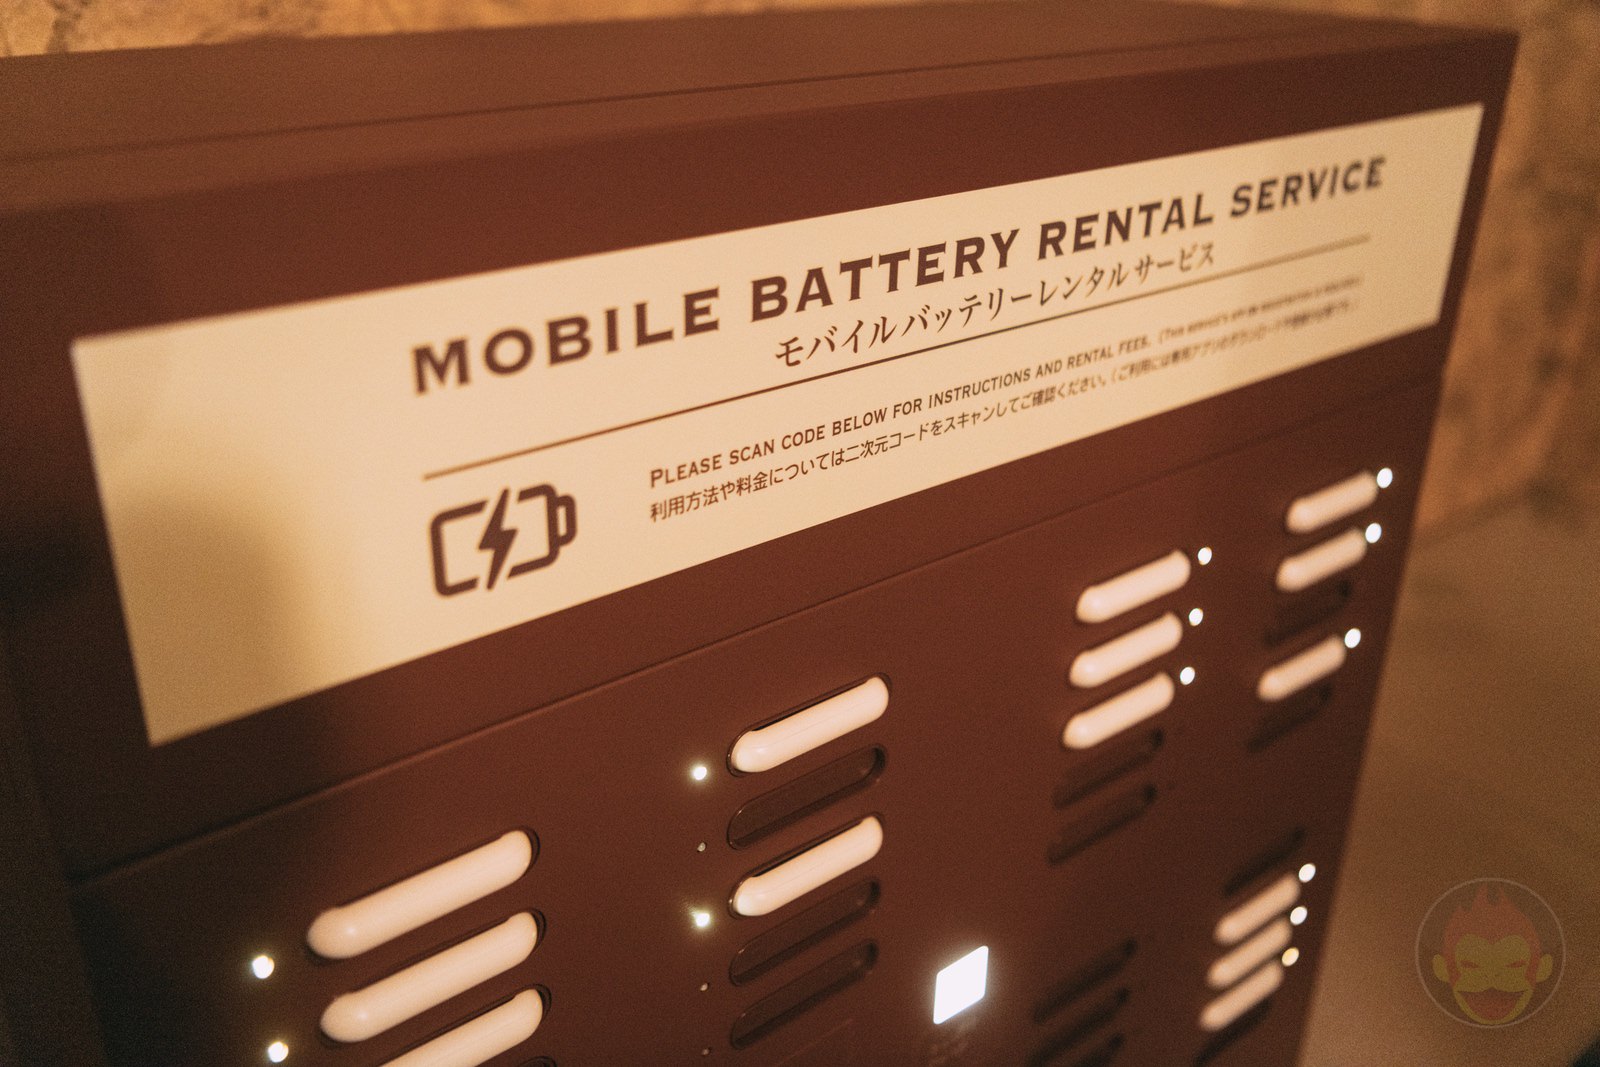 Disney-Mobile-Battery-Rental-Service-03.jpg